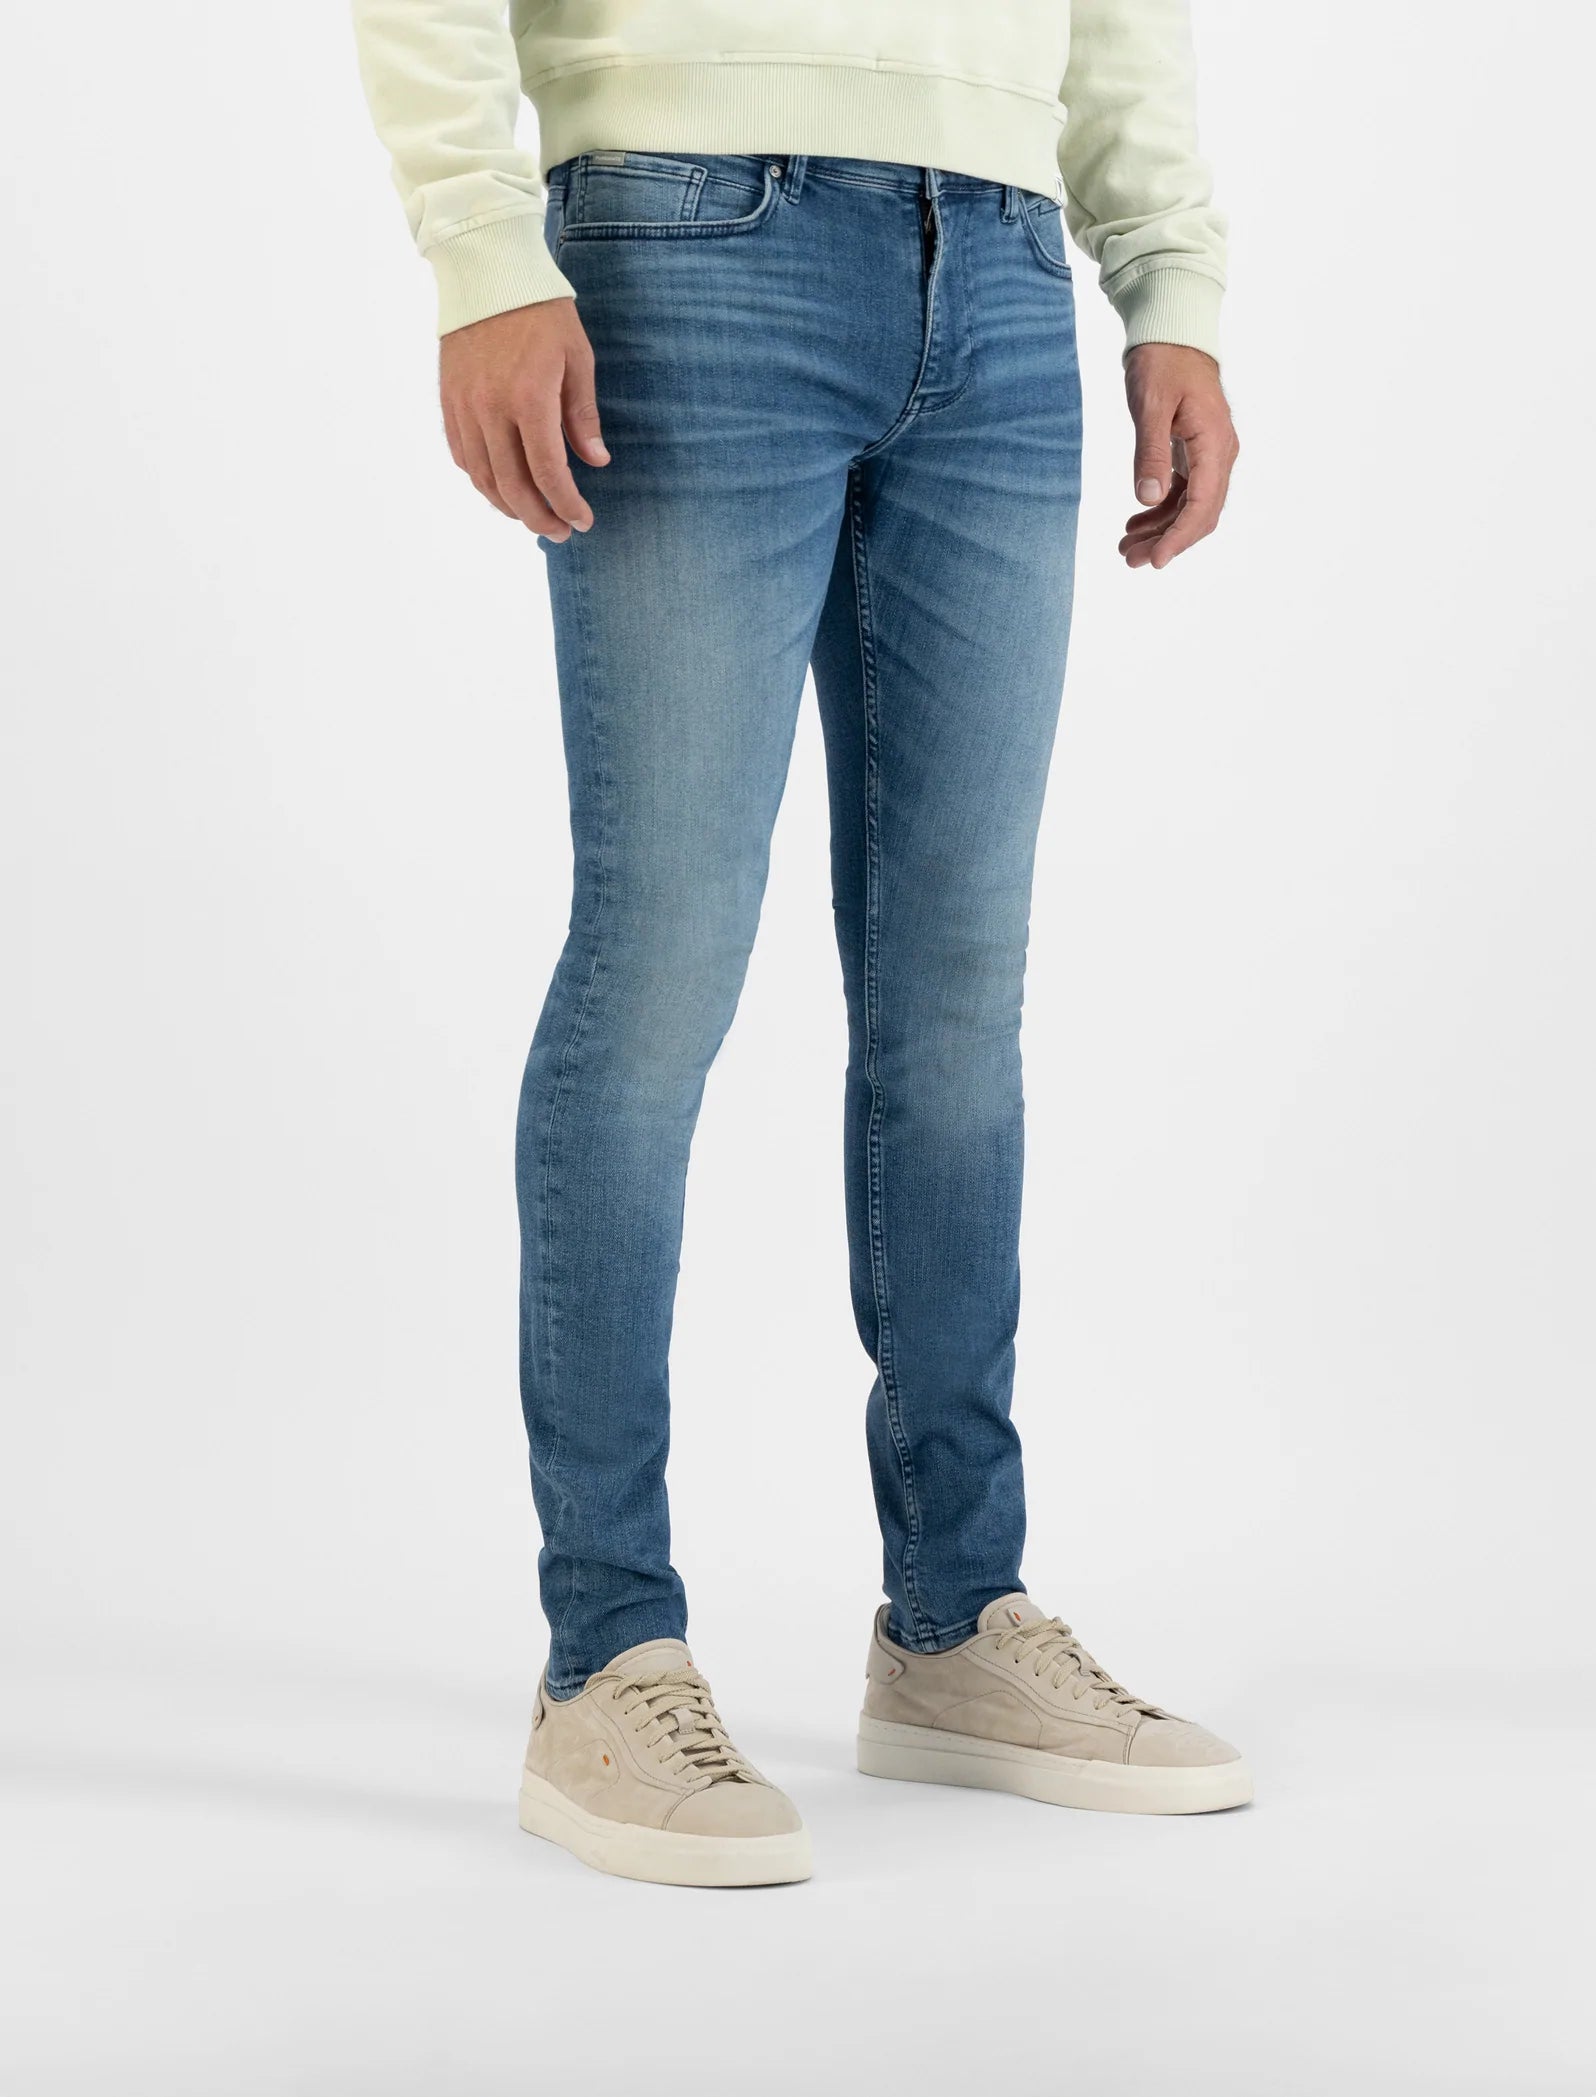 Purewhite Jeans The Jone W0965